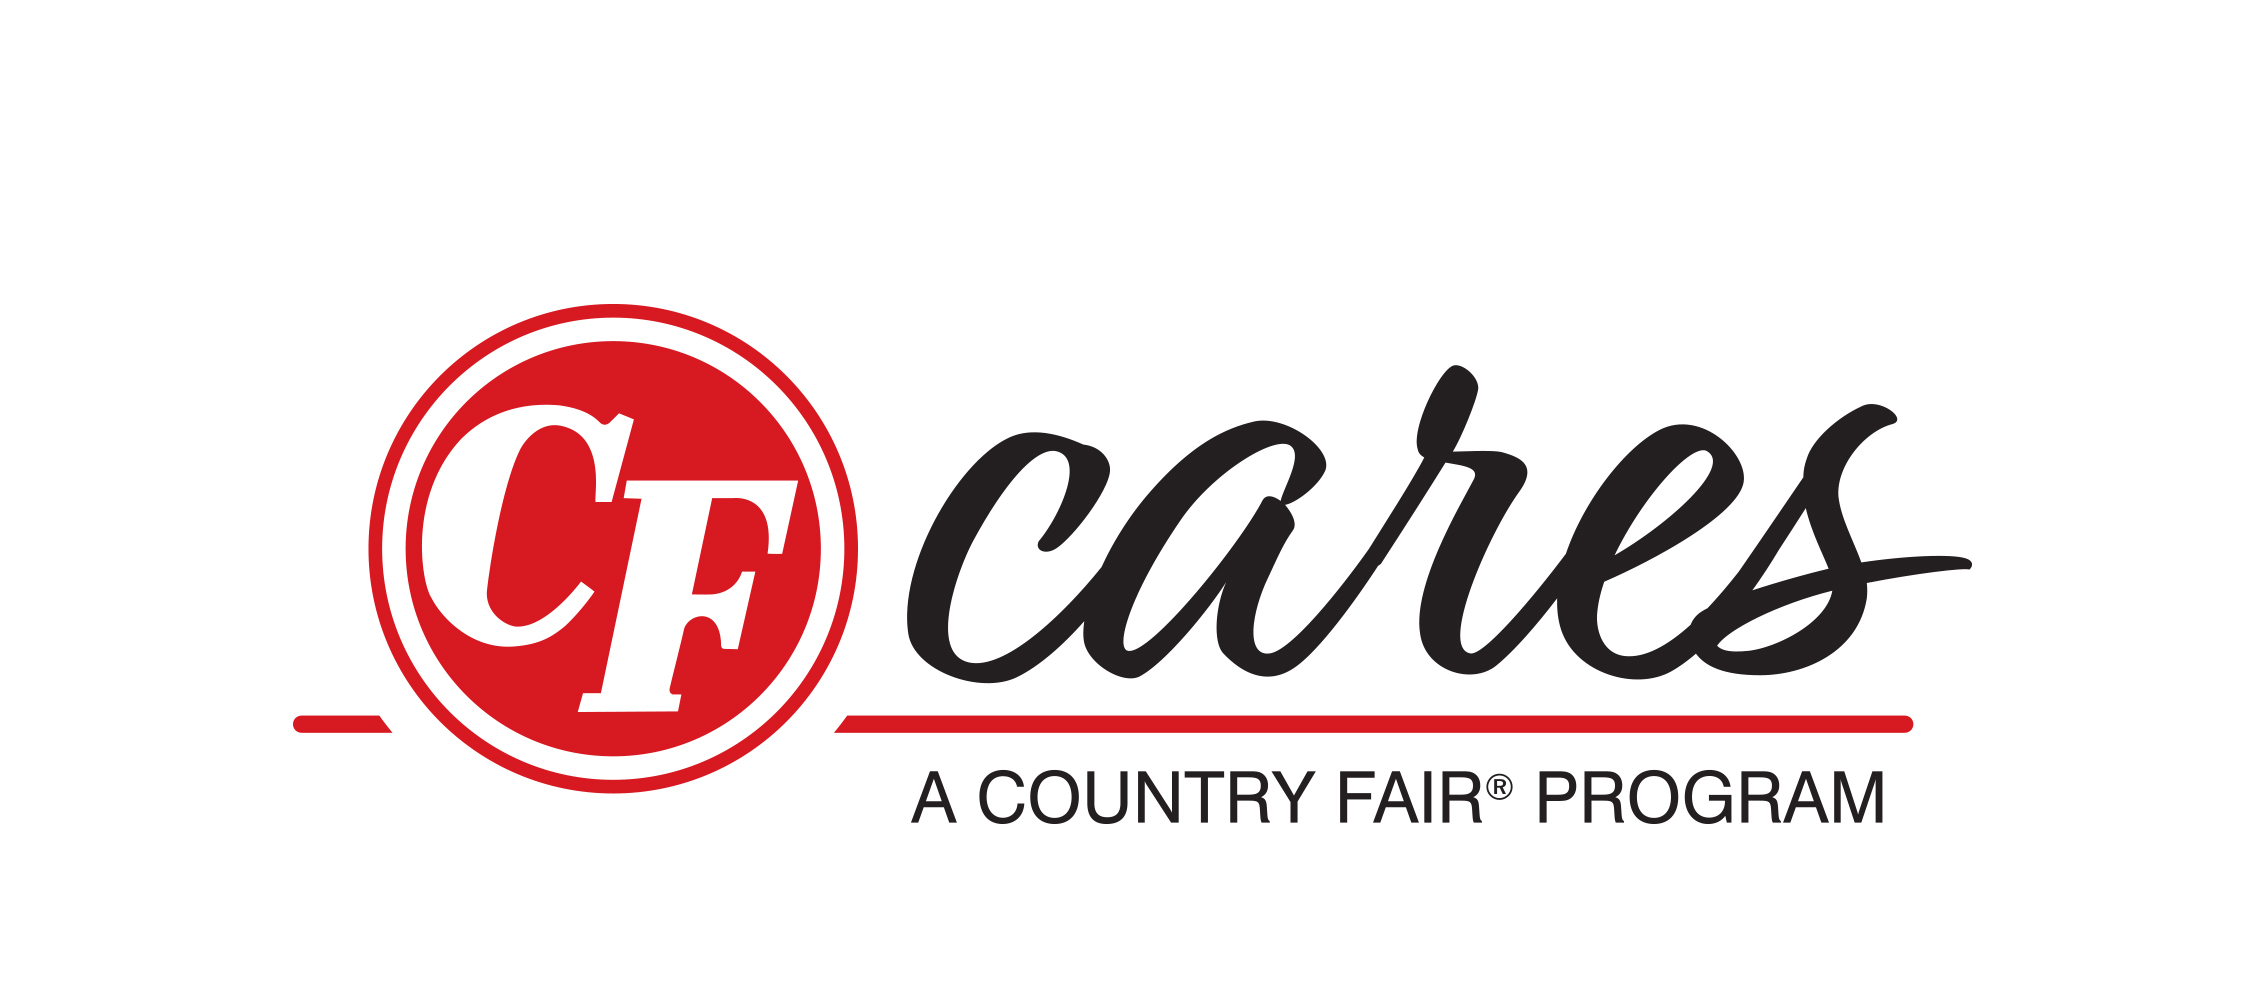 CFcares logo